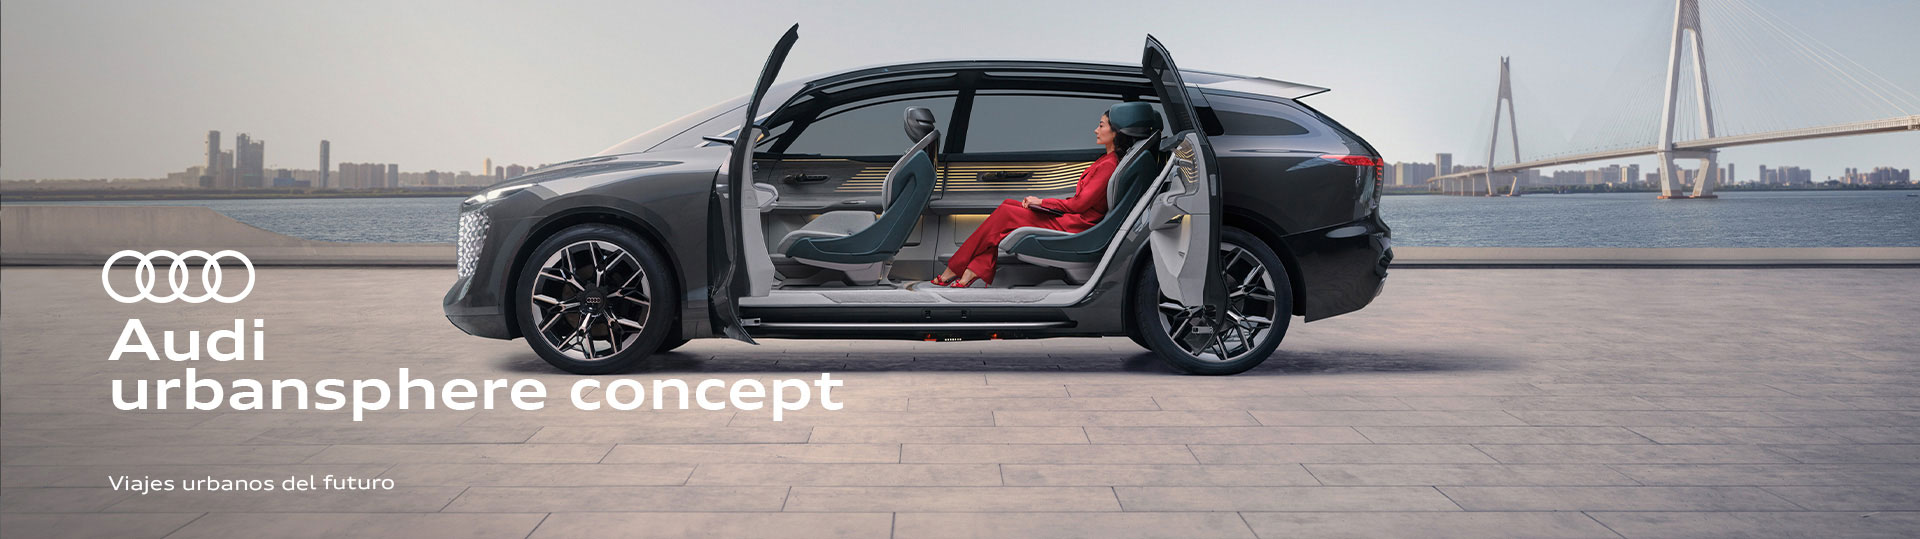 Viajes urbanos del futuro a bordo de Audi urbansphere concept